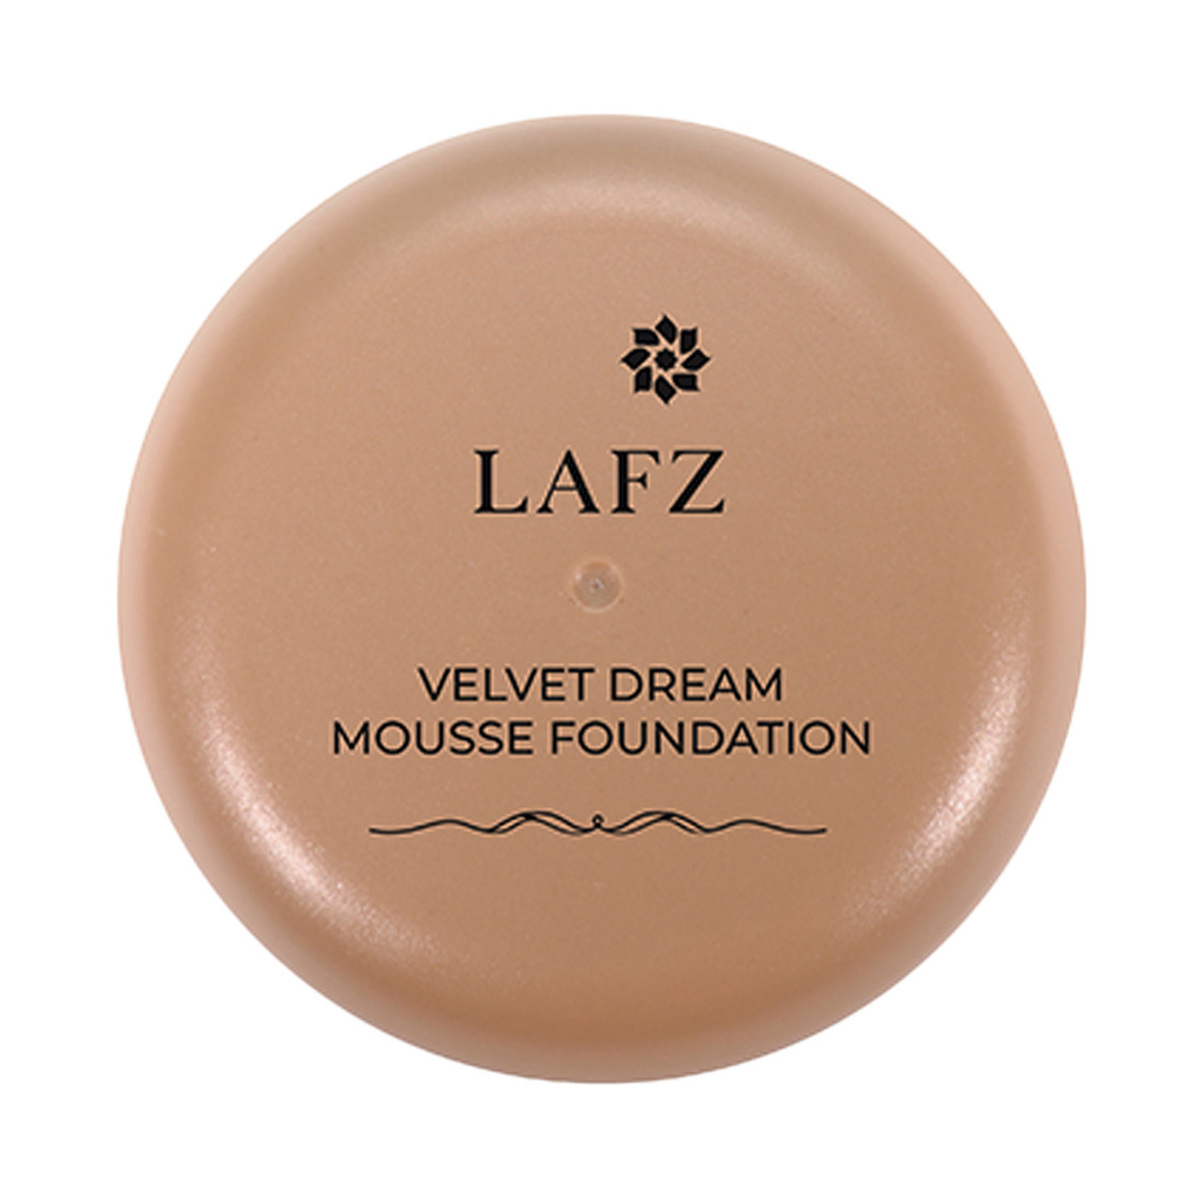 Lafz Velvet Dream Mousse Foundation, 20 g, Warm Porcelain